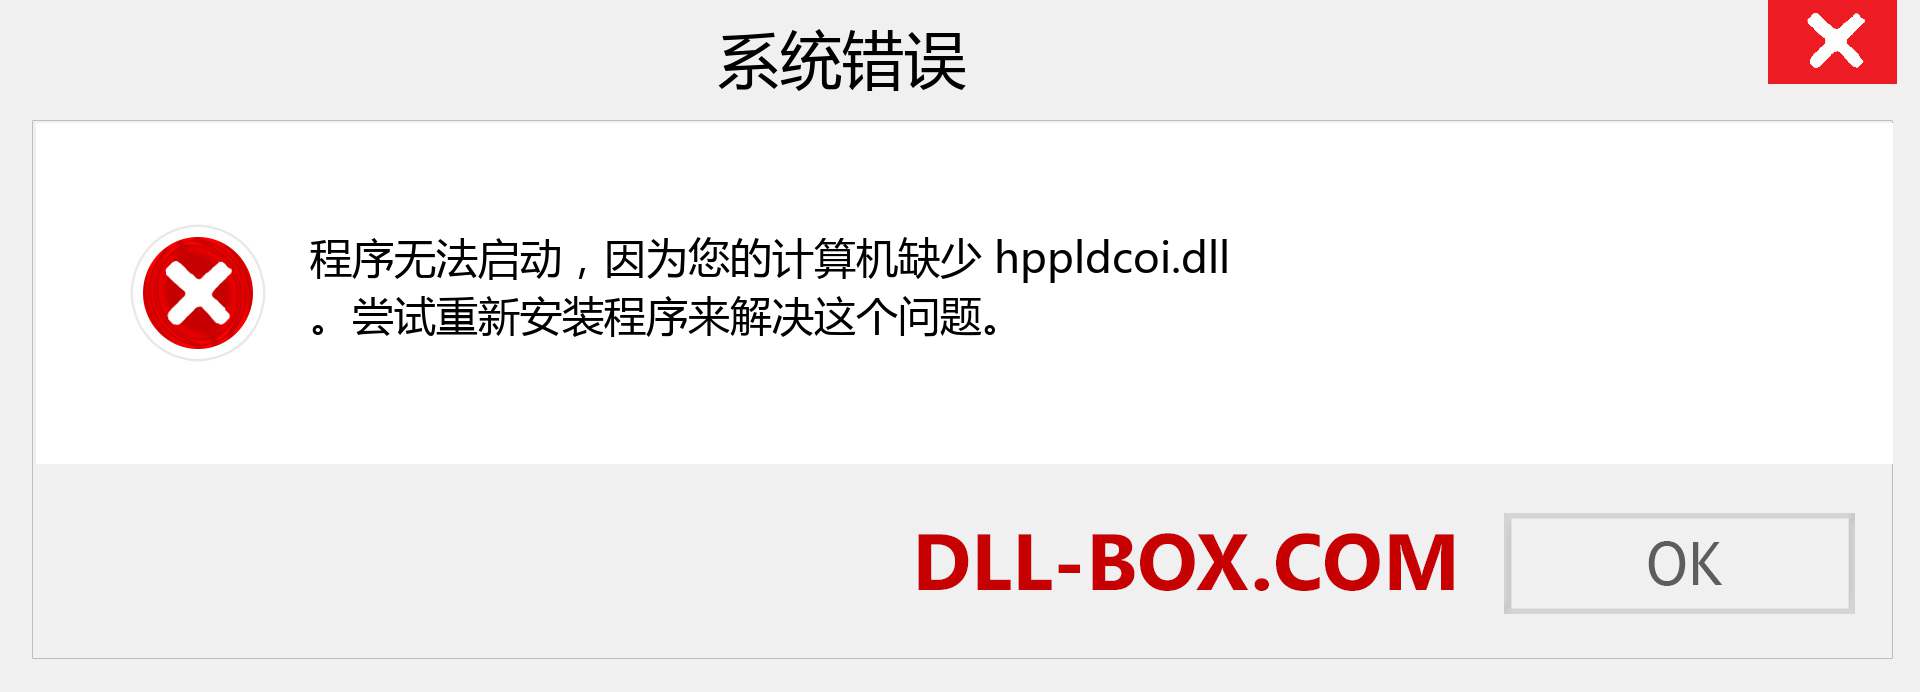 hppldcoi.dll 文件丢失？。 适用于 Windows 7、8、10 的下载 - 修复 Windows、照片、图像上的 hppldcoi dll 丢失错误